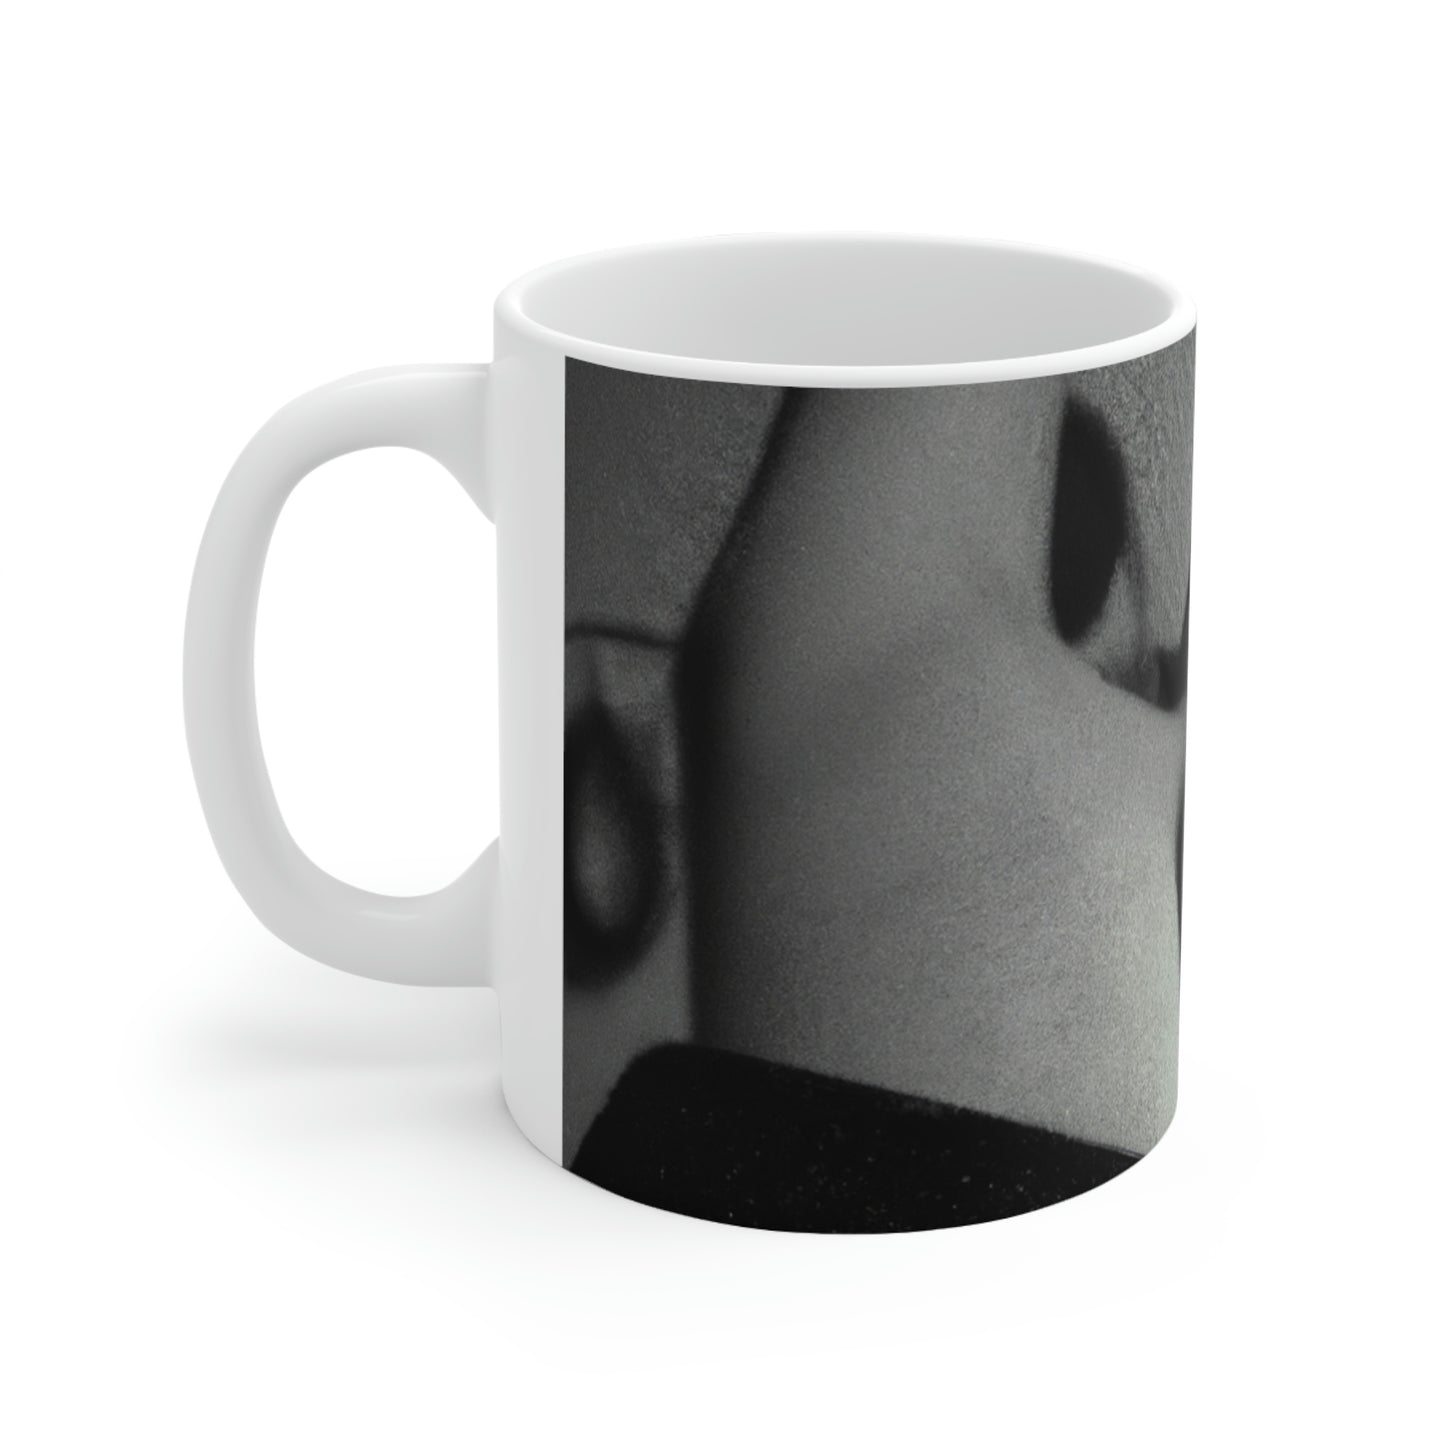 "The Burden of Time Travel" - The Alien Ceramic Mug 11 oz